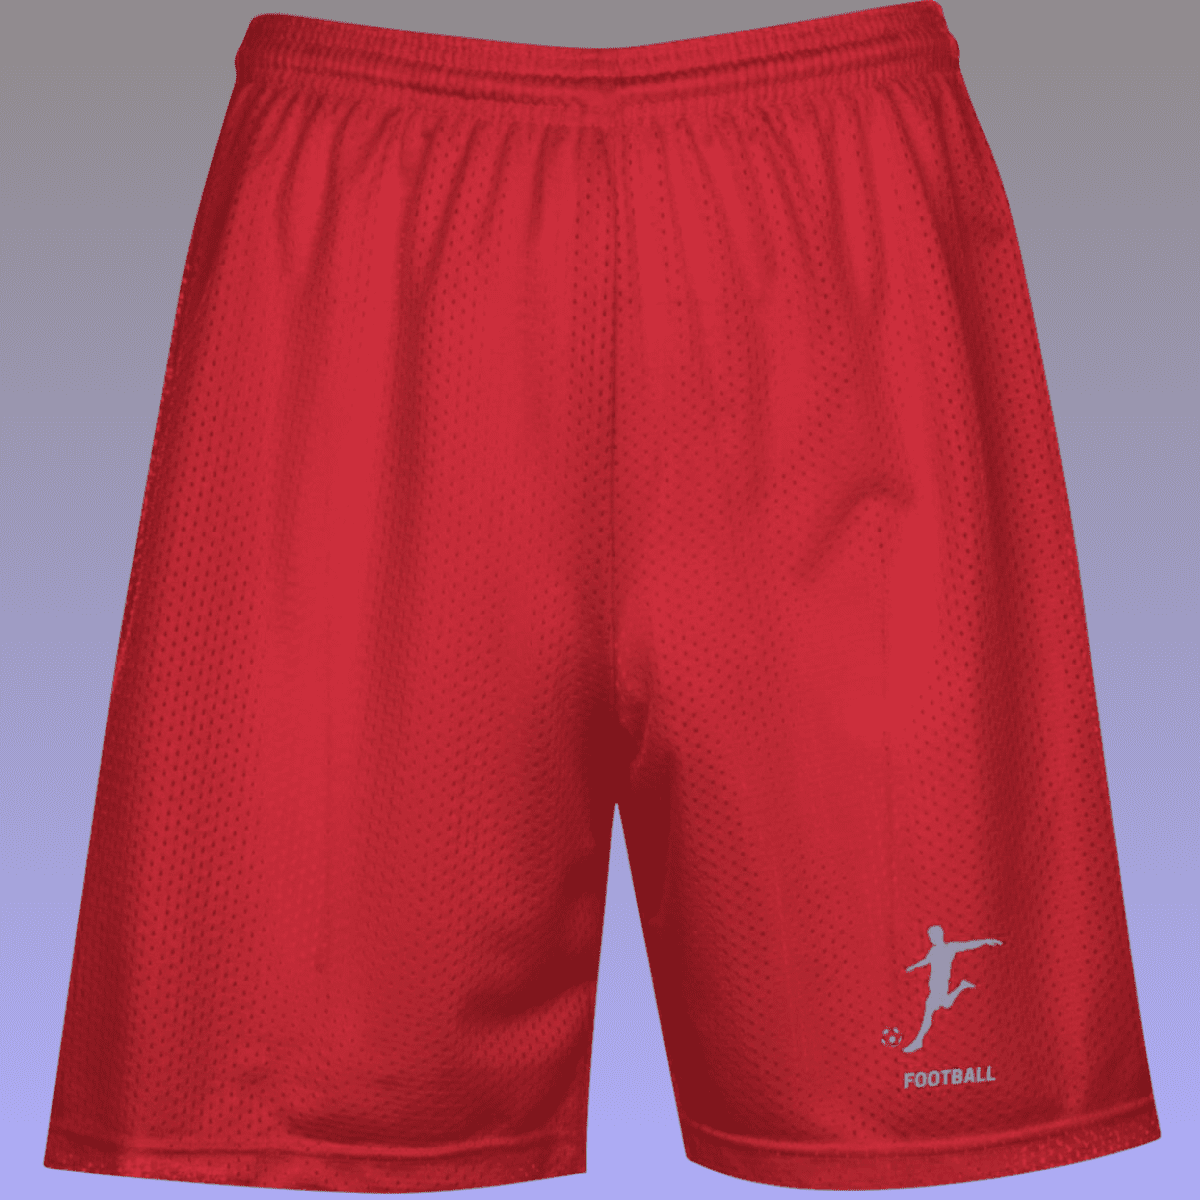 Men's Red Football Performance Mesh Shorts